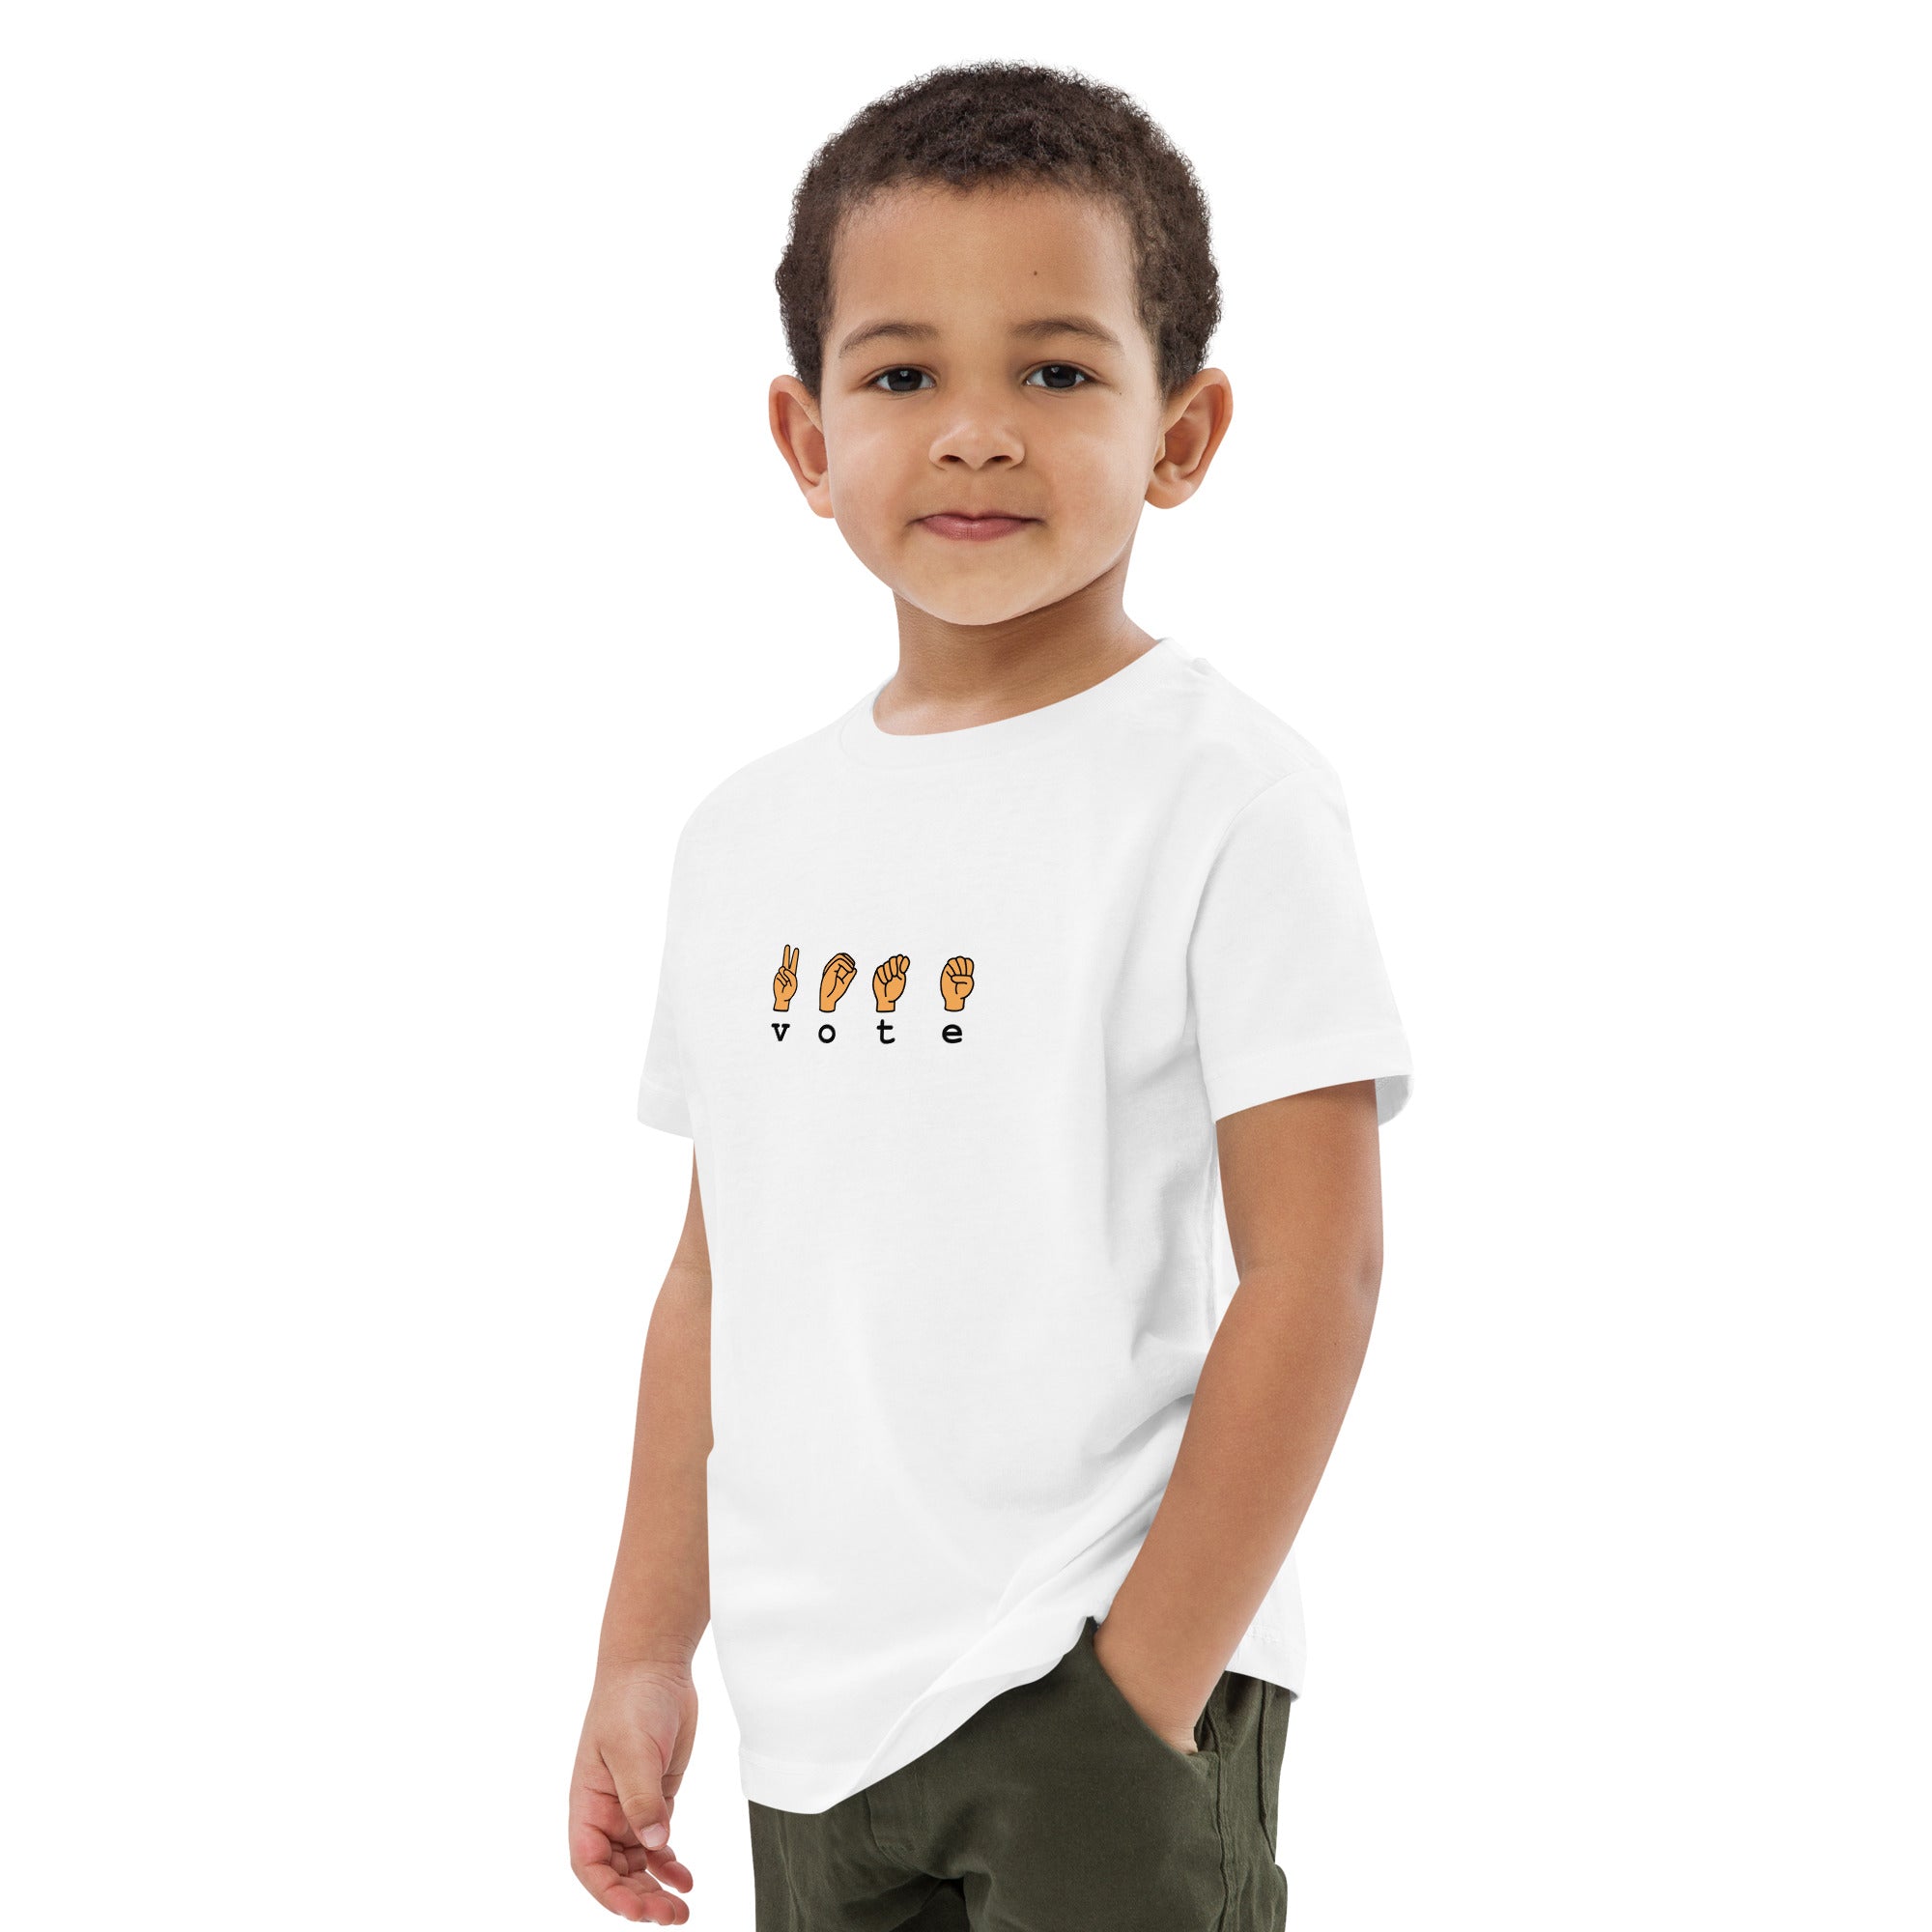 Vote Sign- Organic cotton kids t-shirt